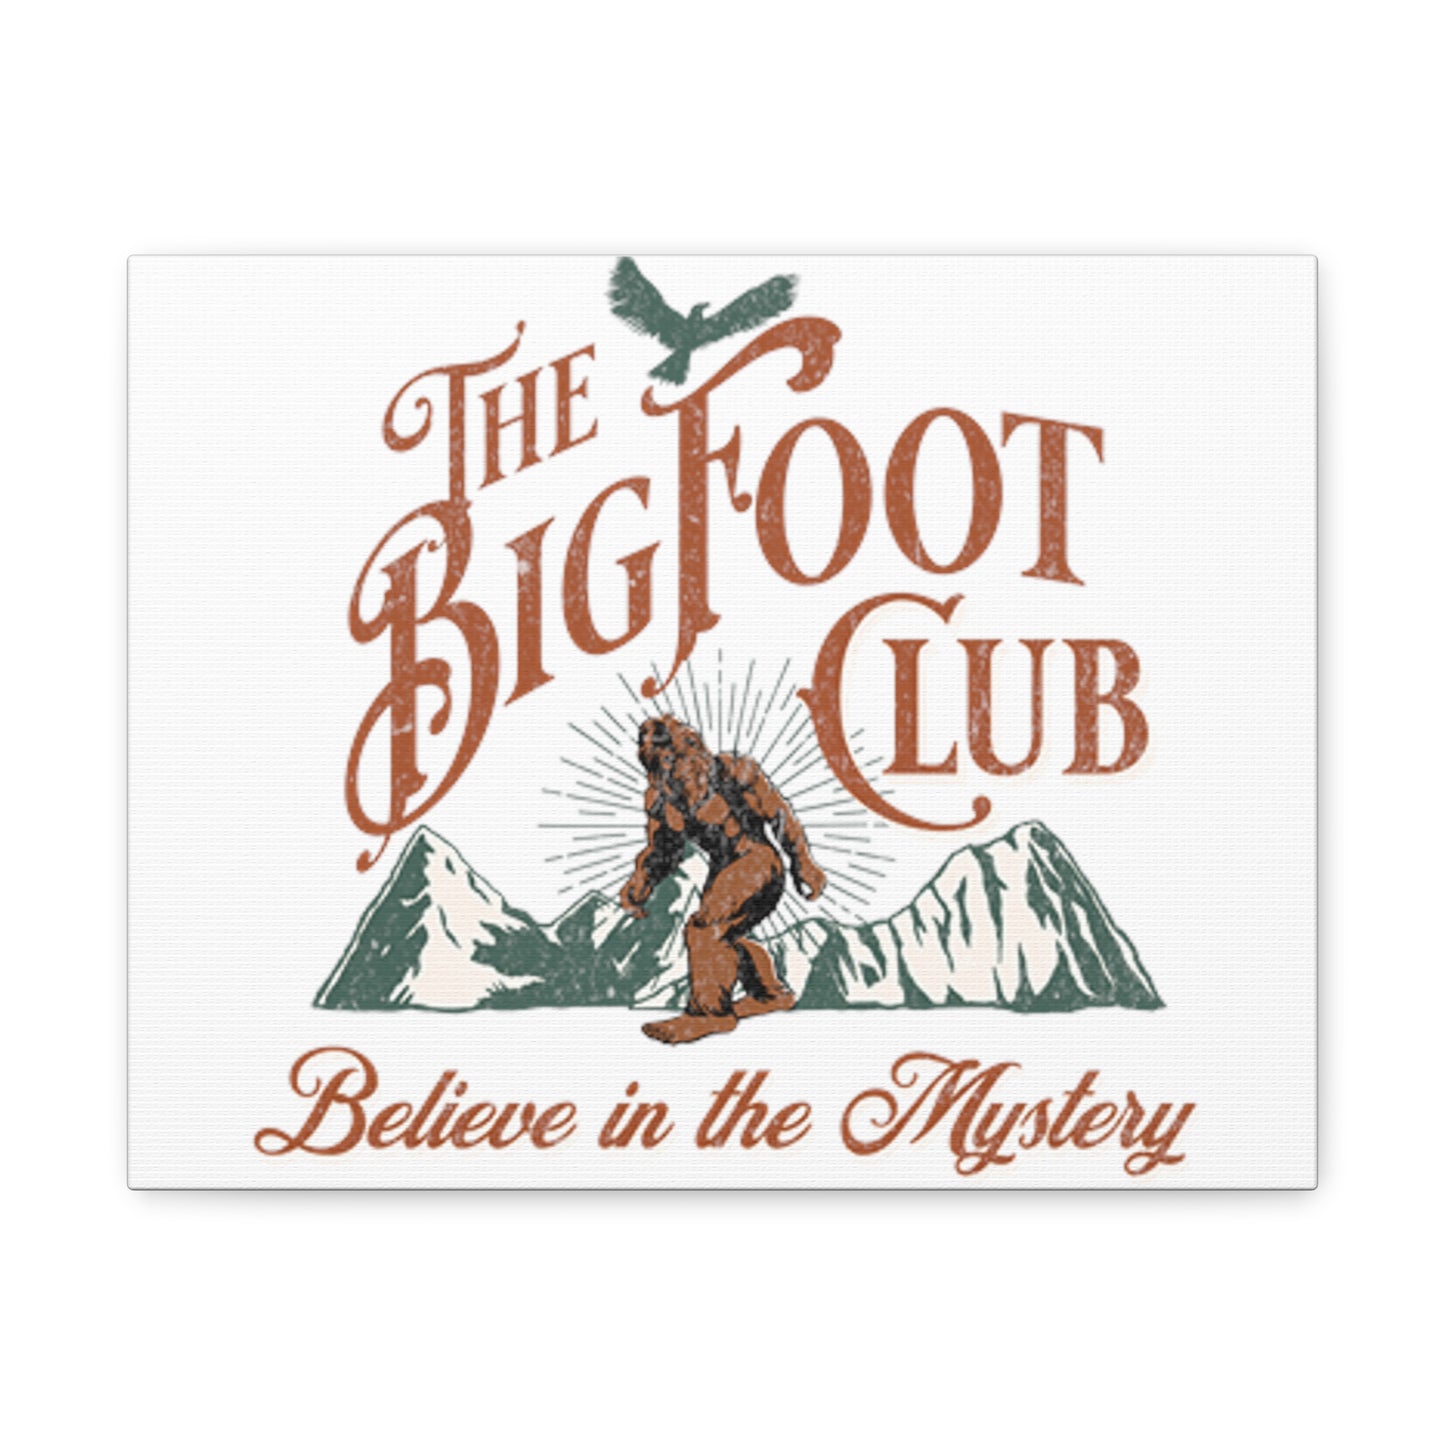 The Bigfoot Club Canvas Gallery Wraps Gift Hunter Men Women Unisex Sasquatch Yeti Hunters